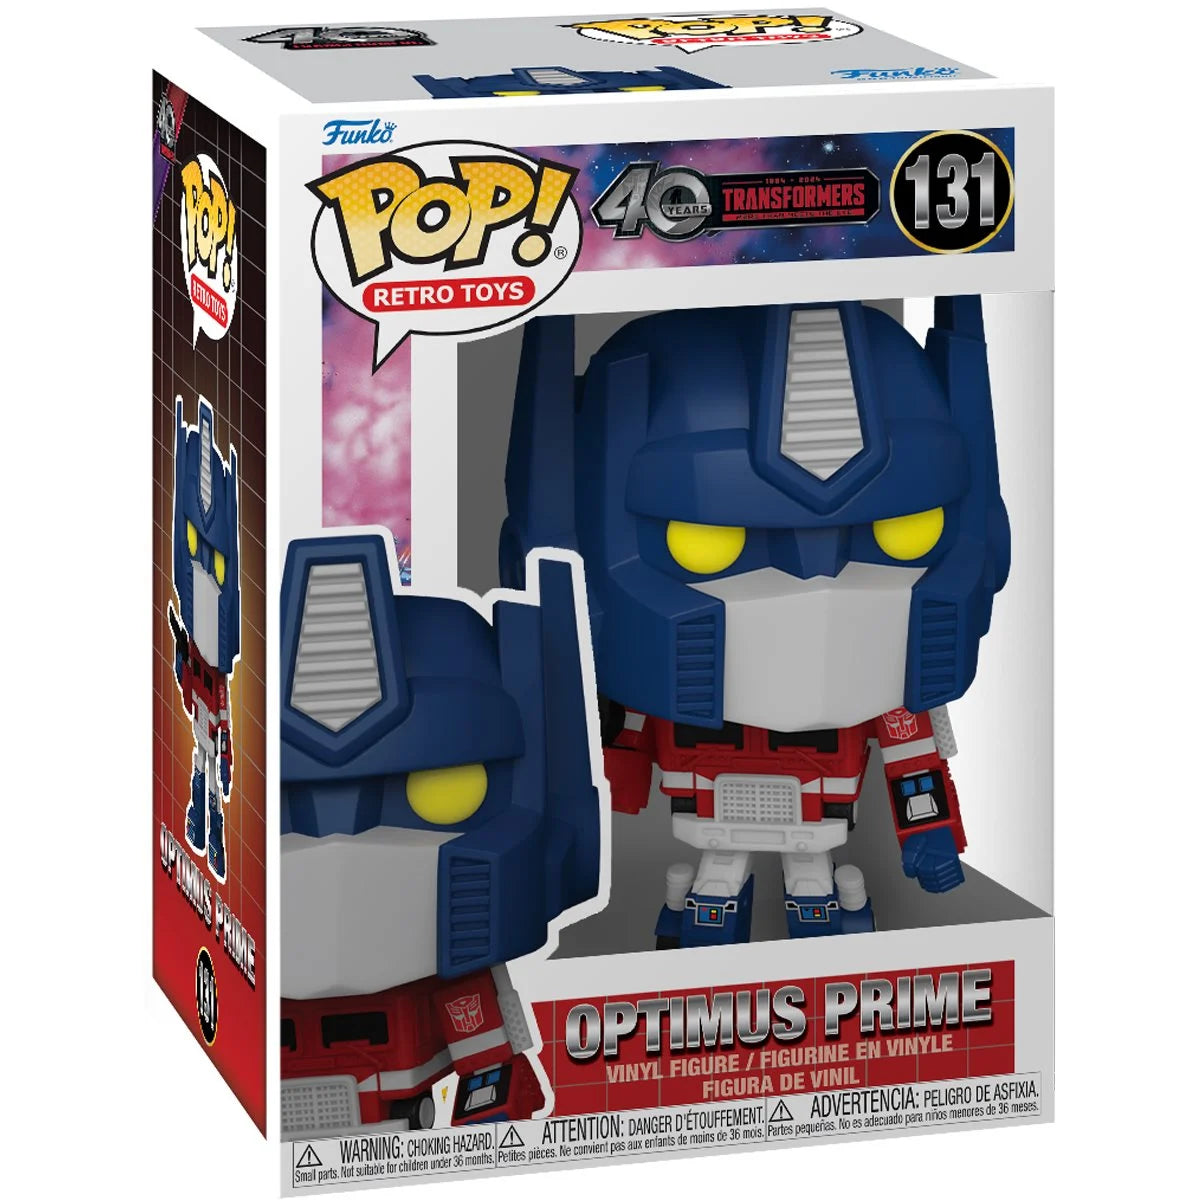 Funko Pop! Transformers: Generation 1 Optimus Prime Vinyl Figure #131